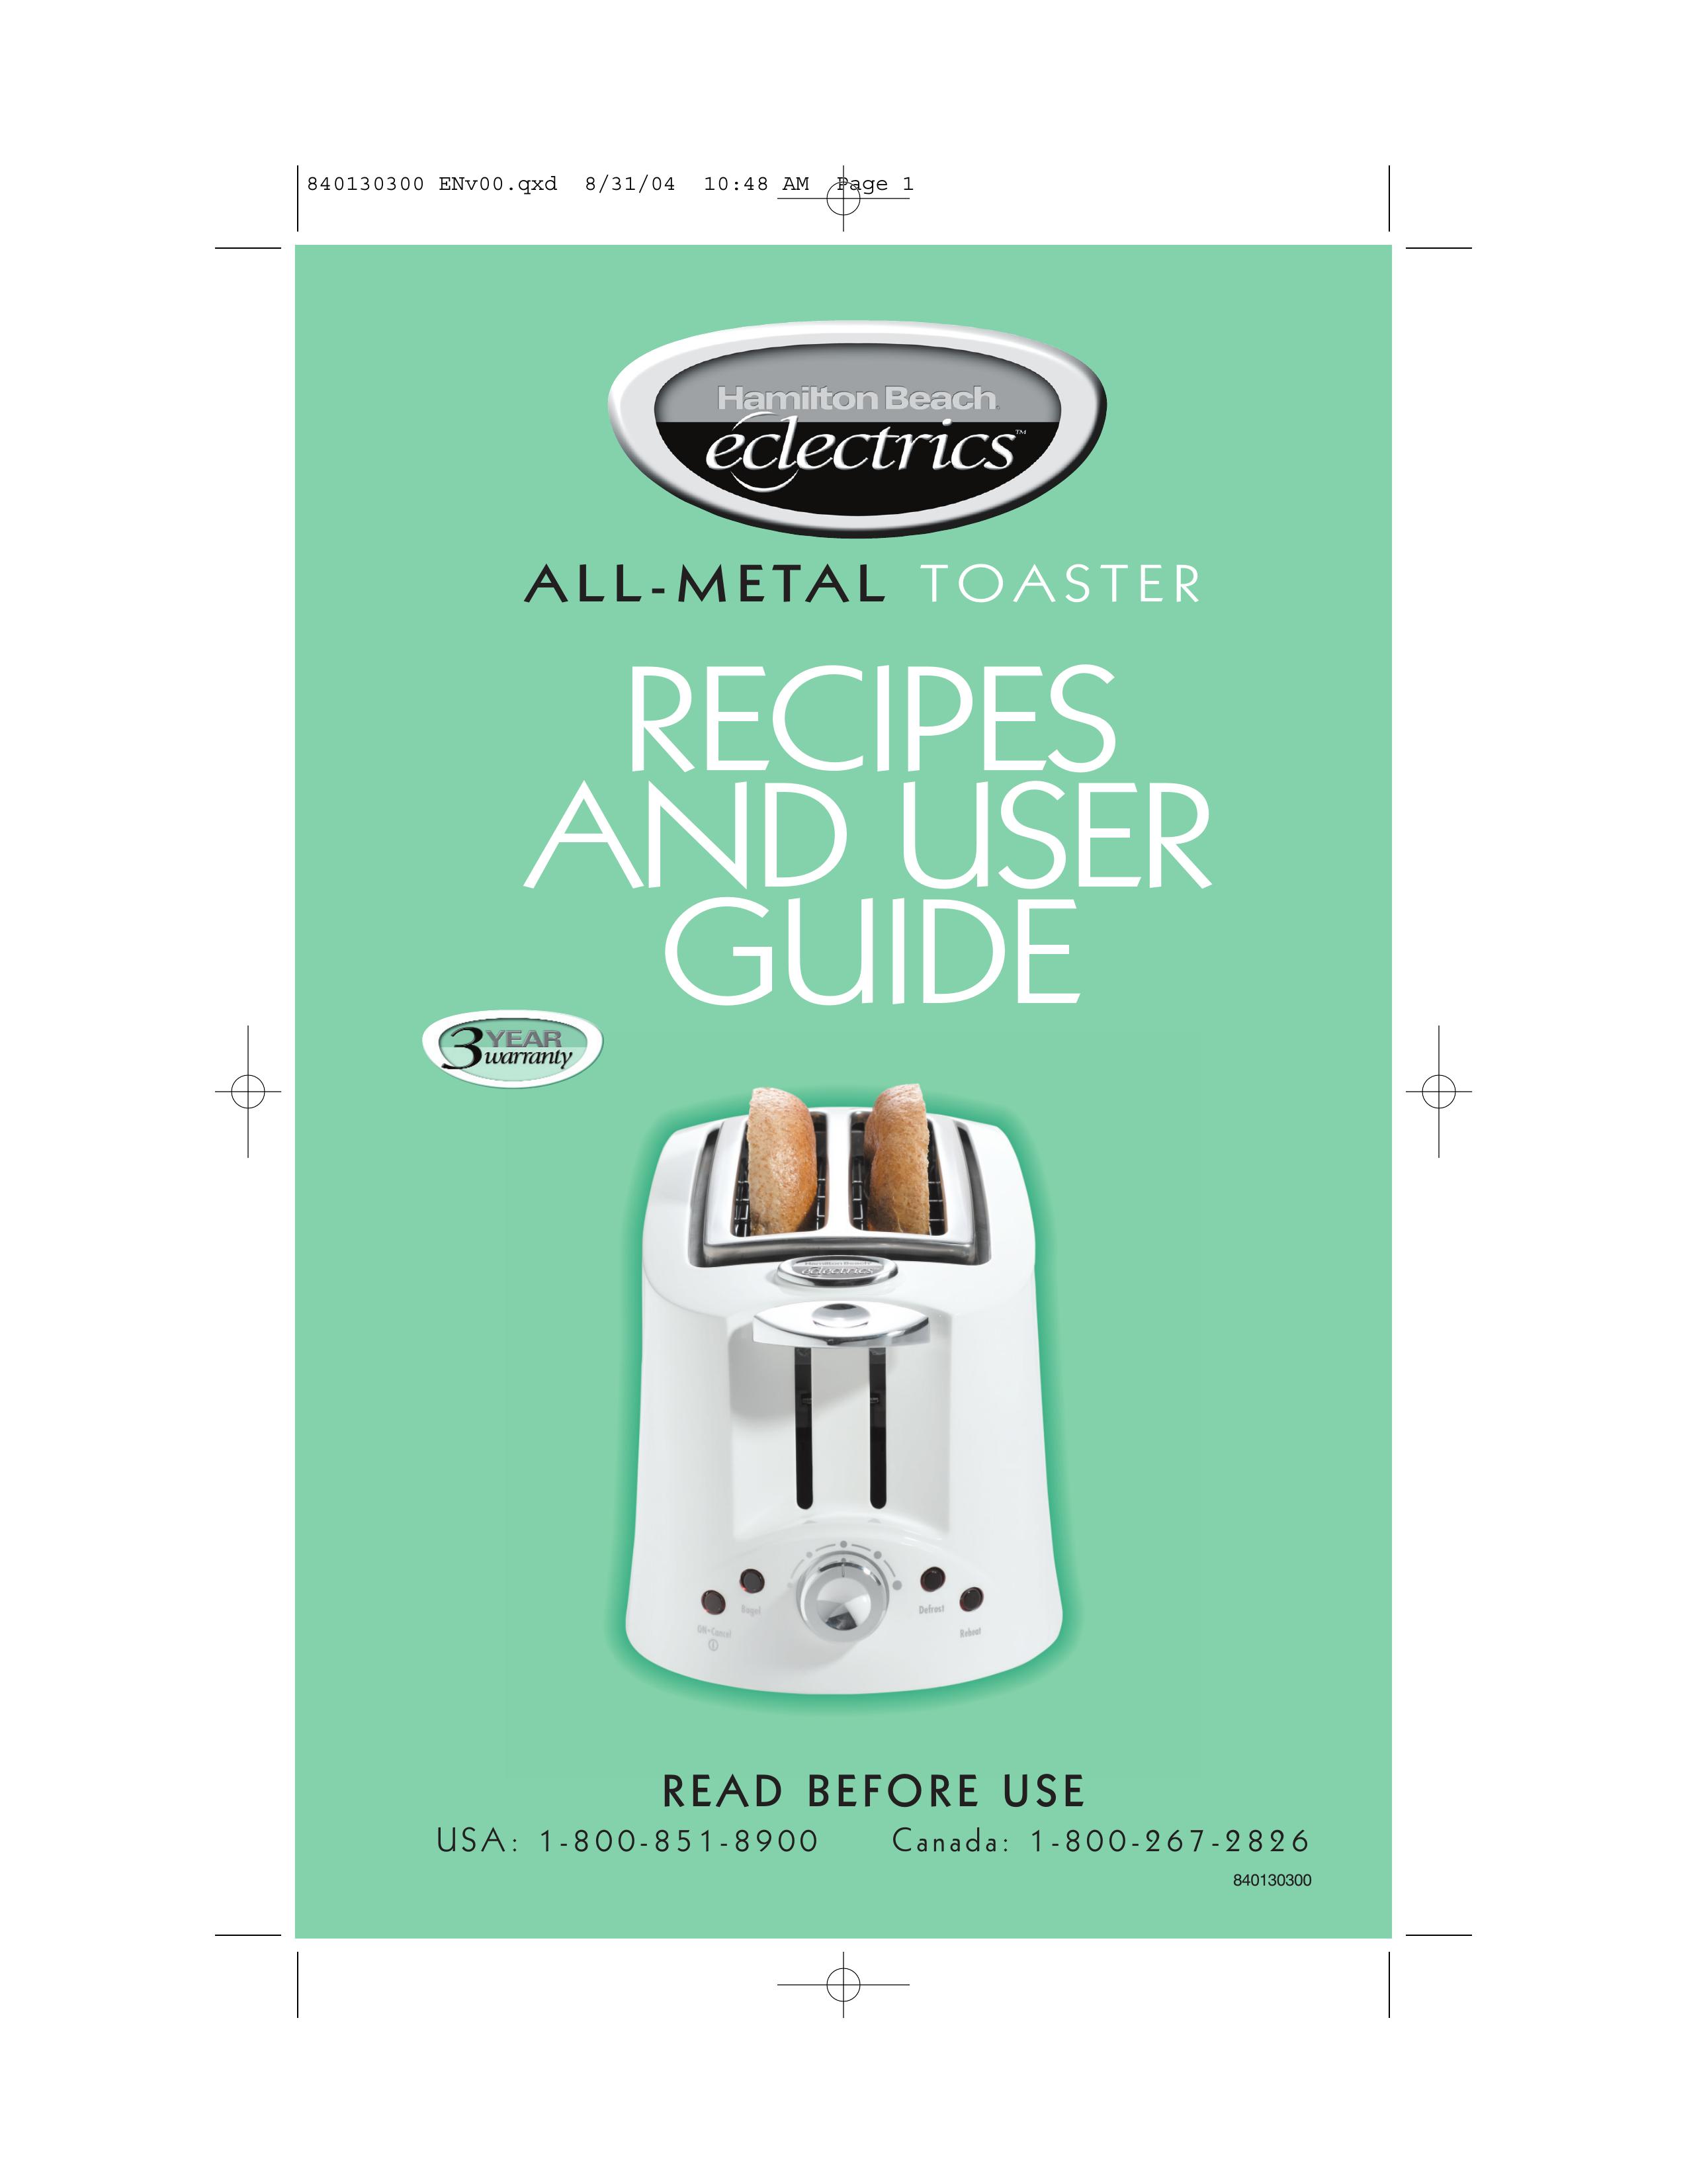 Hamilton Beach All-Metal Toasters Toaster User Manual